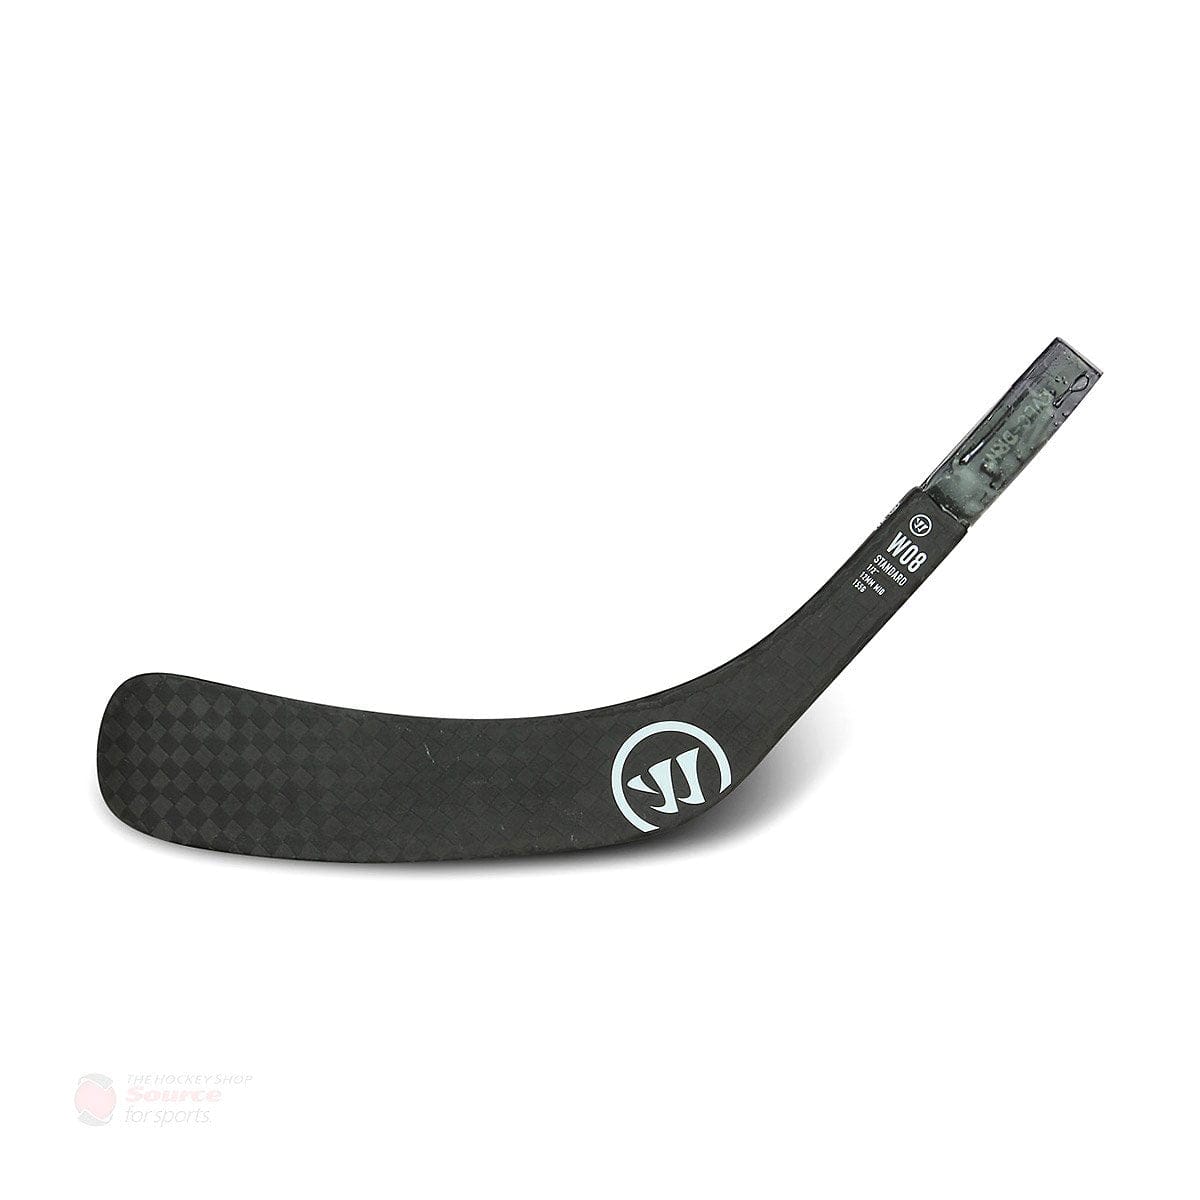 Warrior Pro Standard Senior Composite Hockey Blade